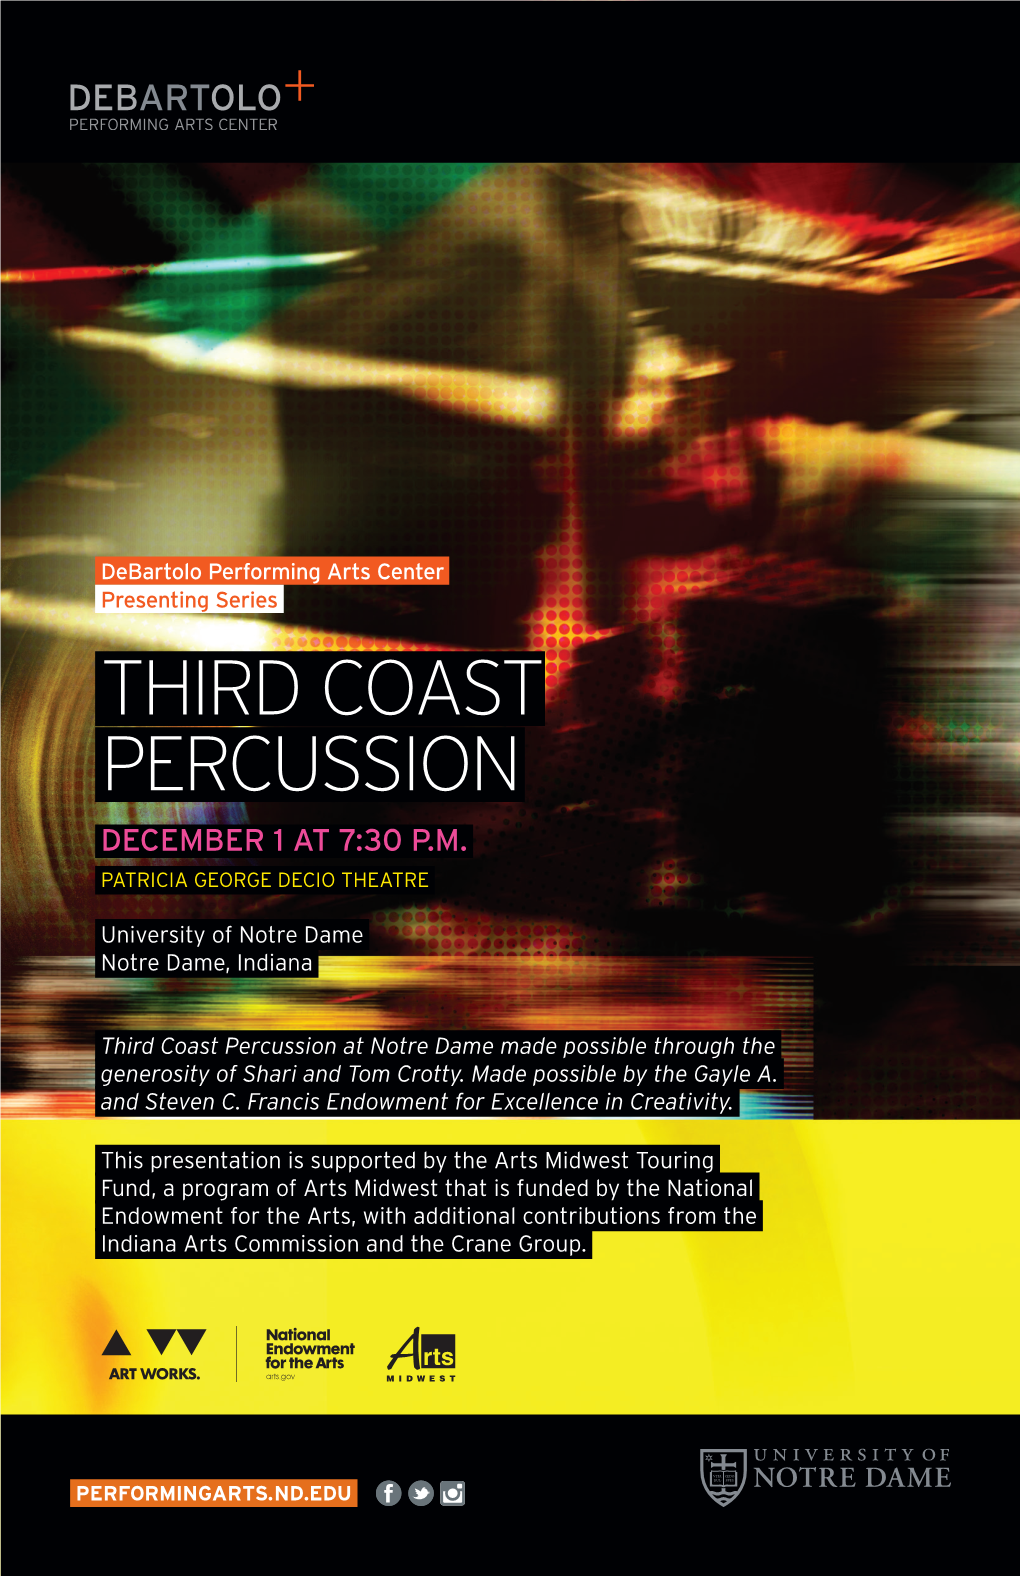 Third Coast Percussion December 1 at 7:30 P.M